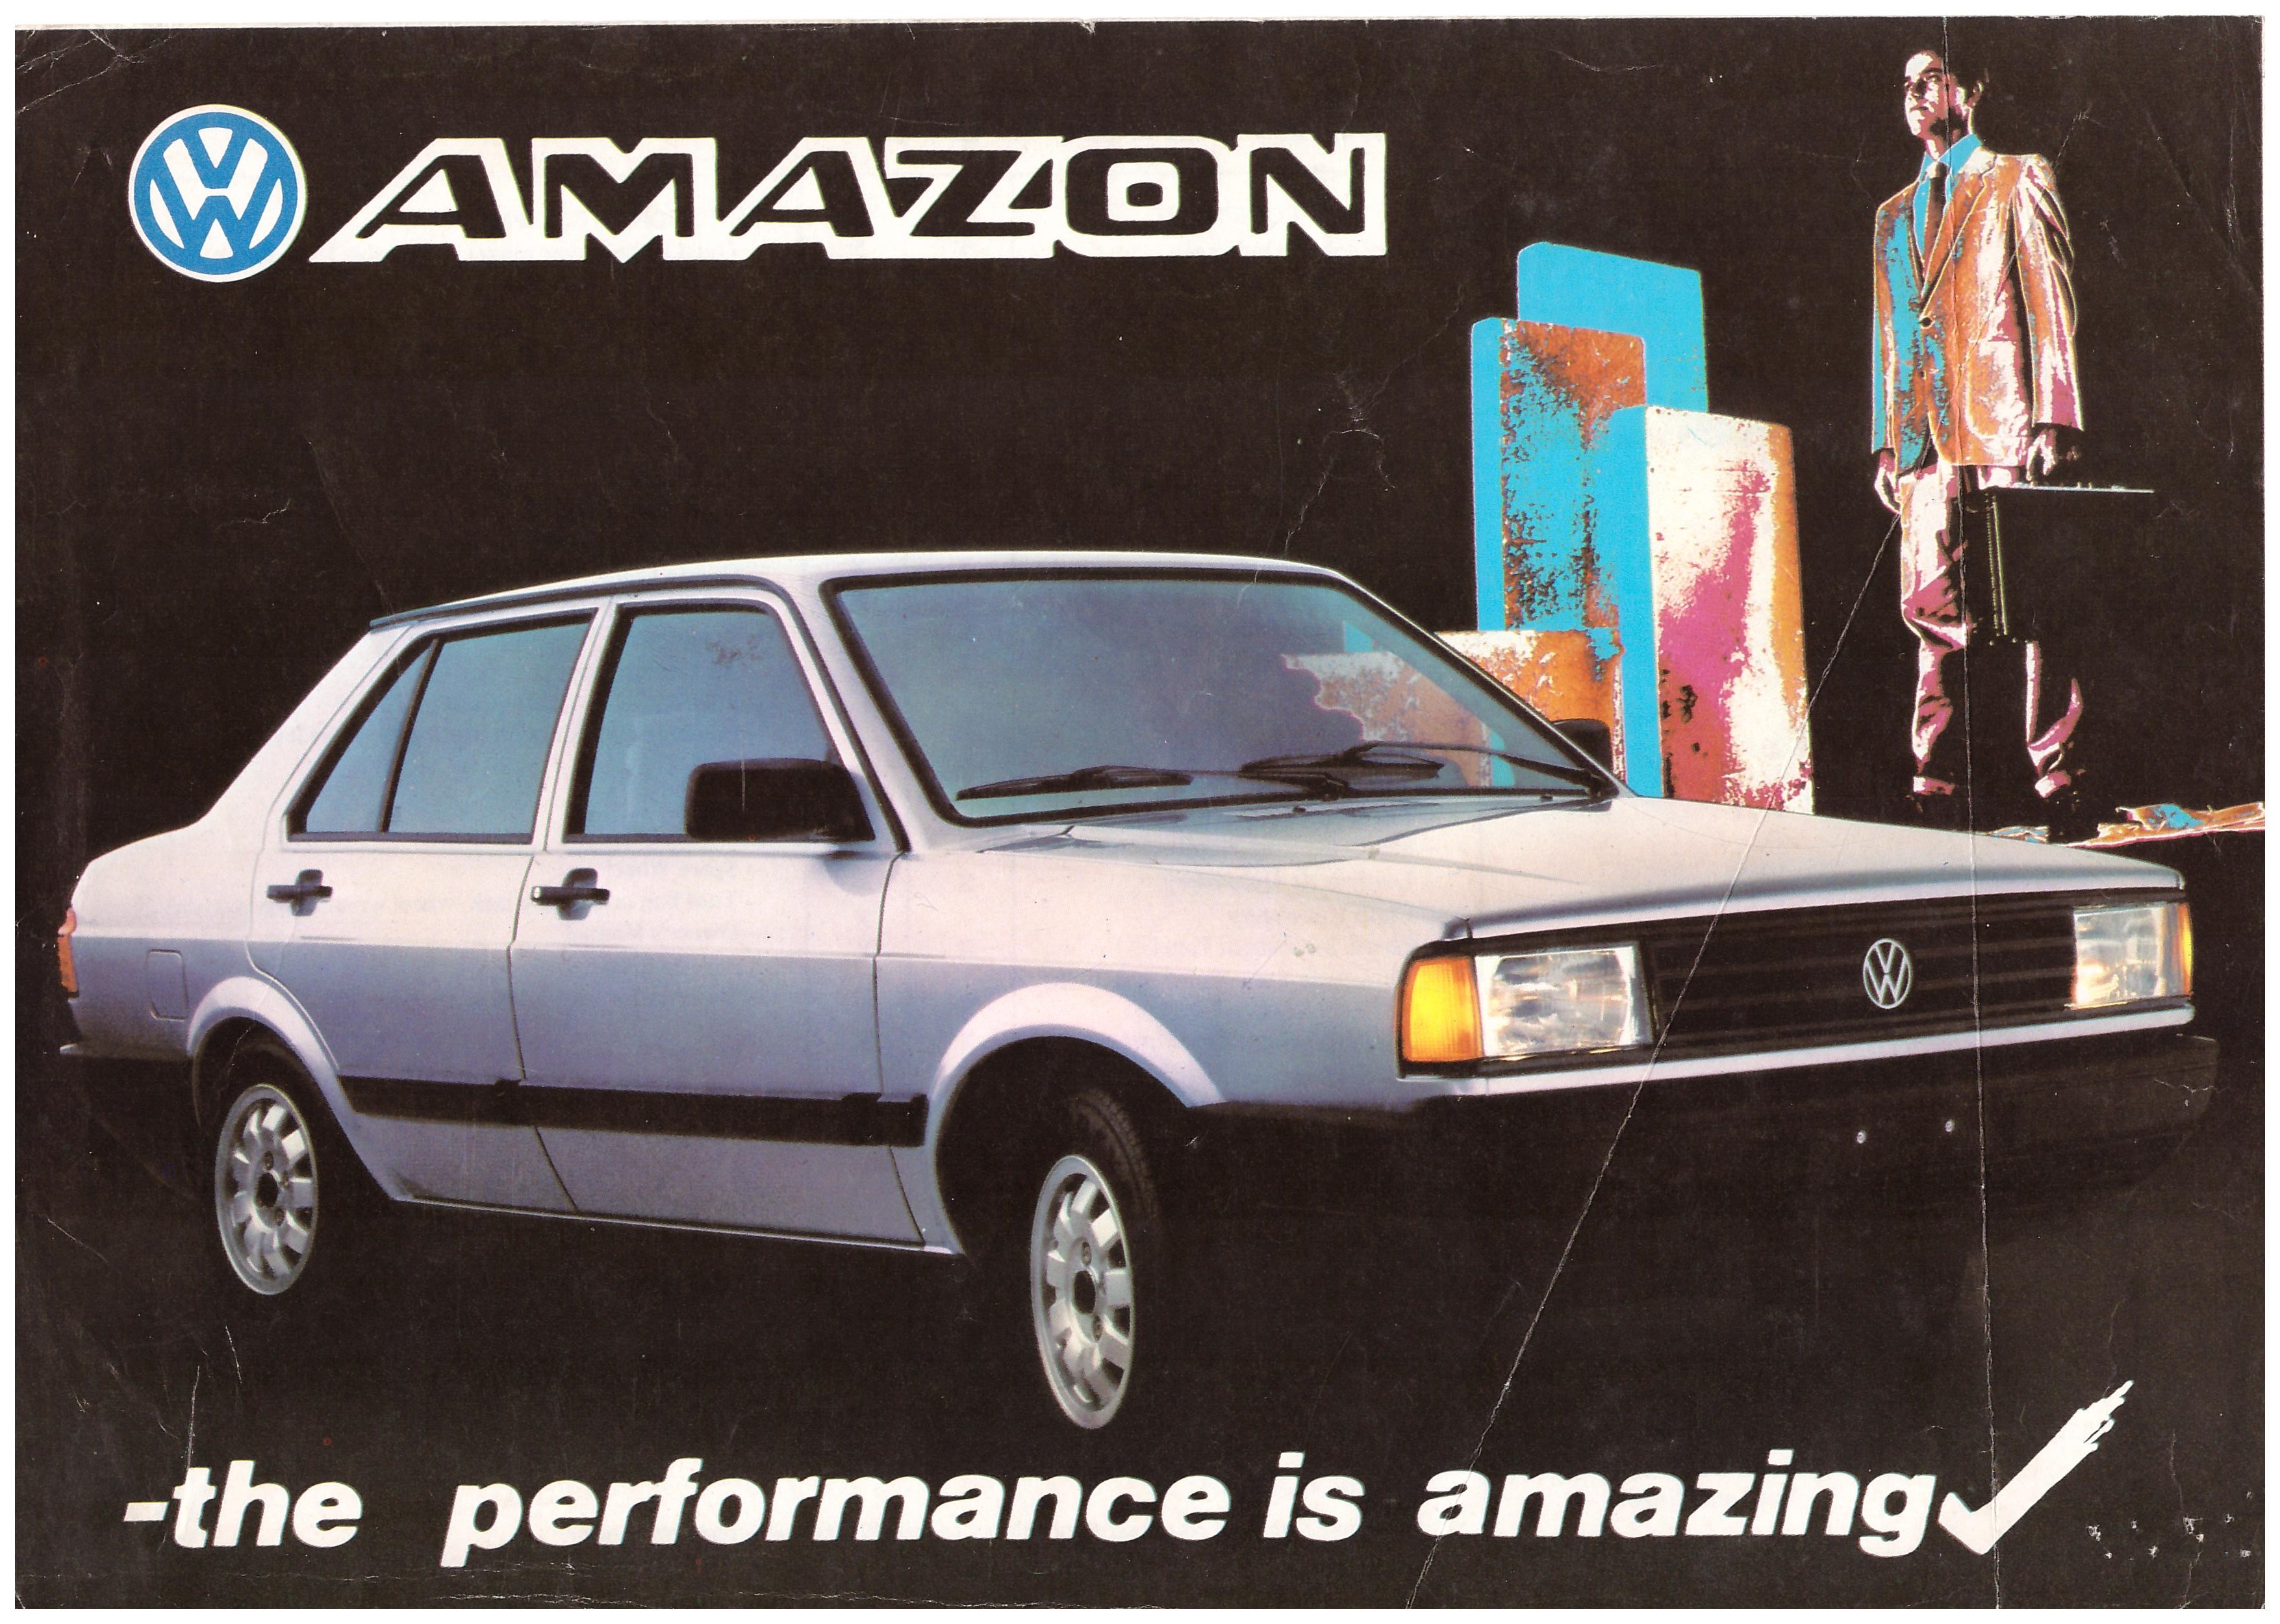 TheSamba.com :: VW Archives - 1988 VW Amazon Sales Brochure - Brazil